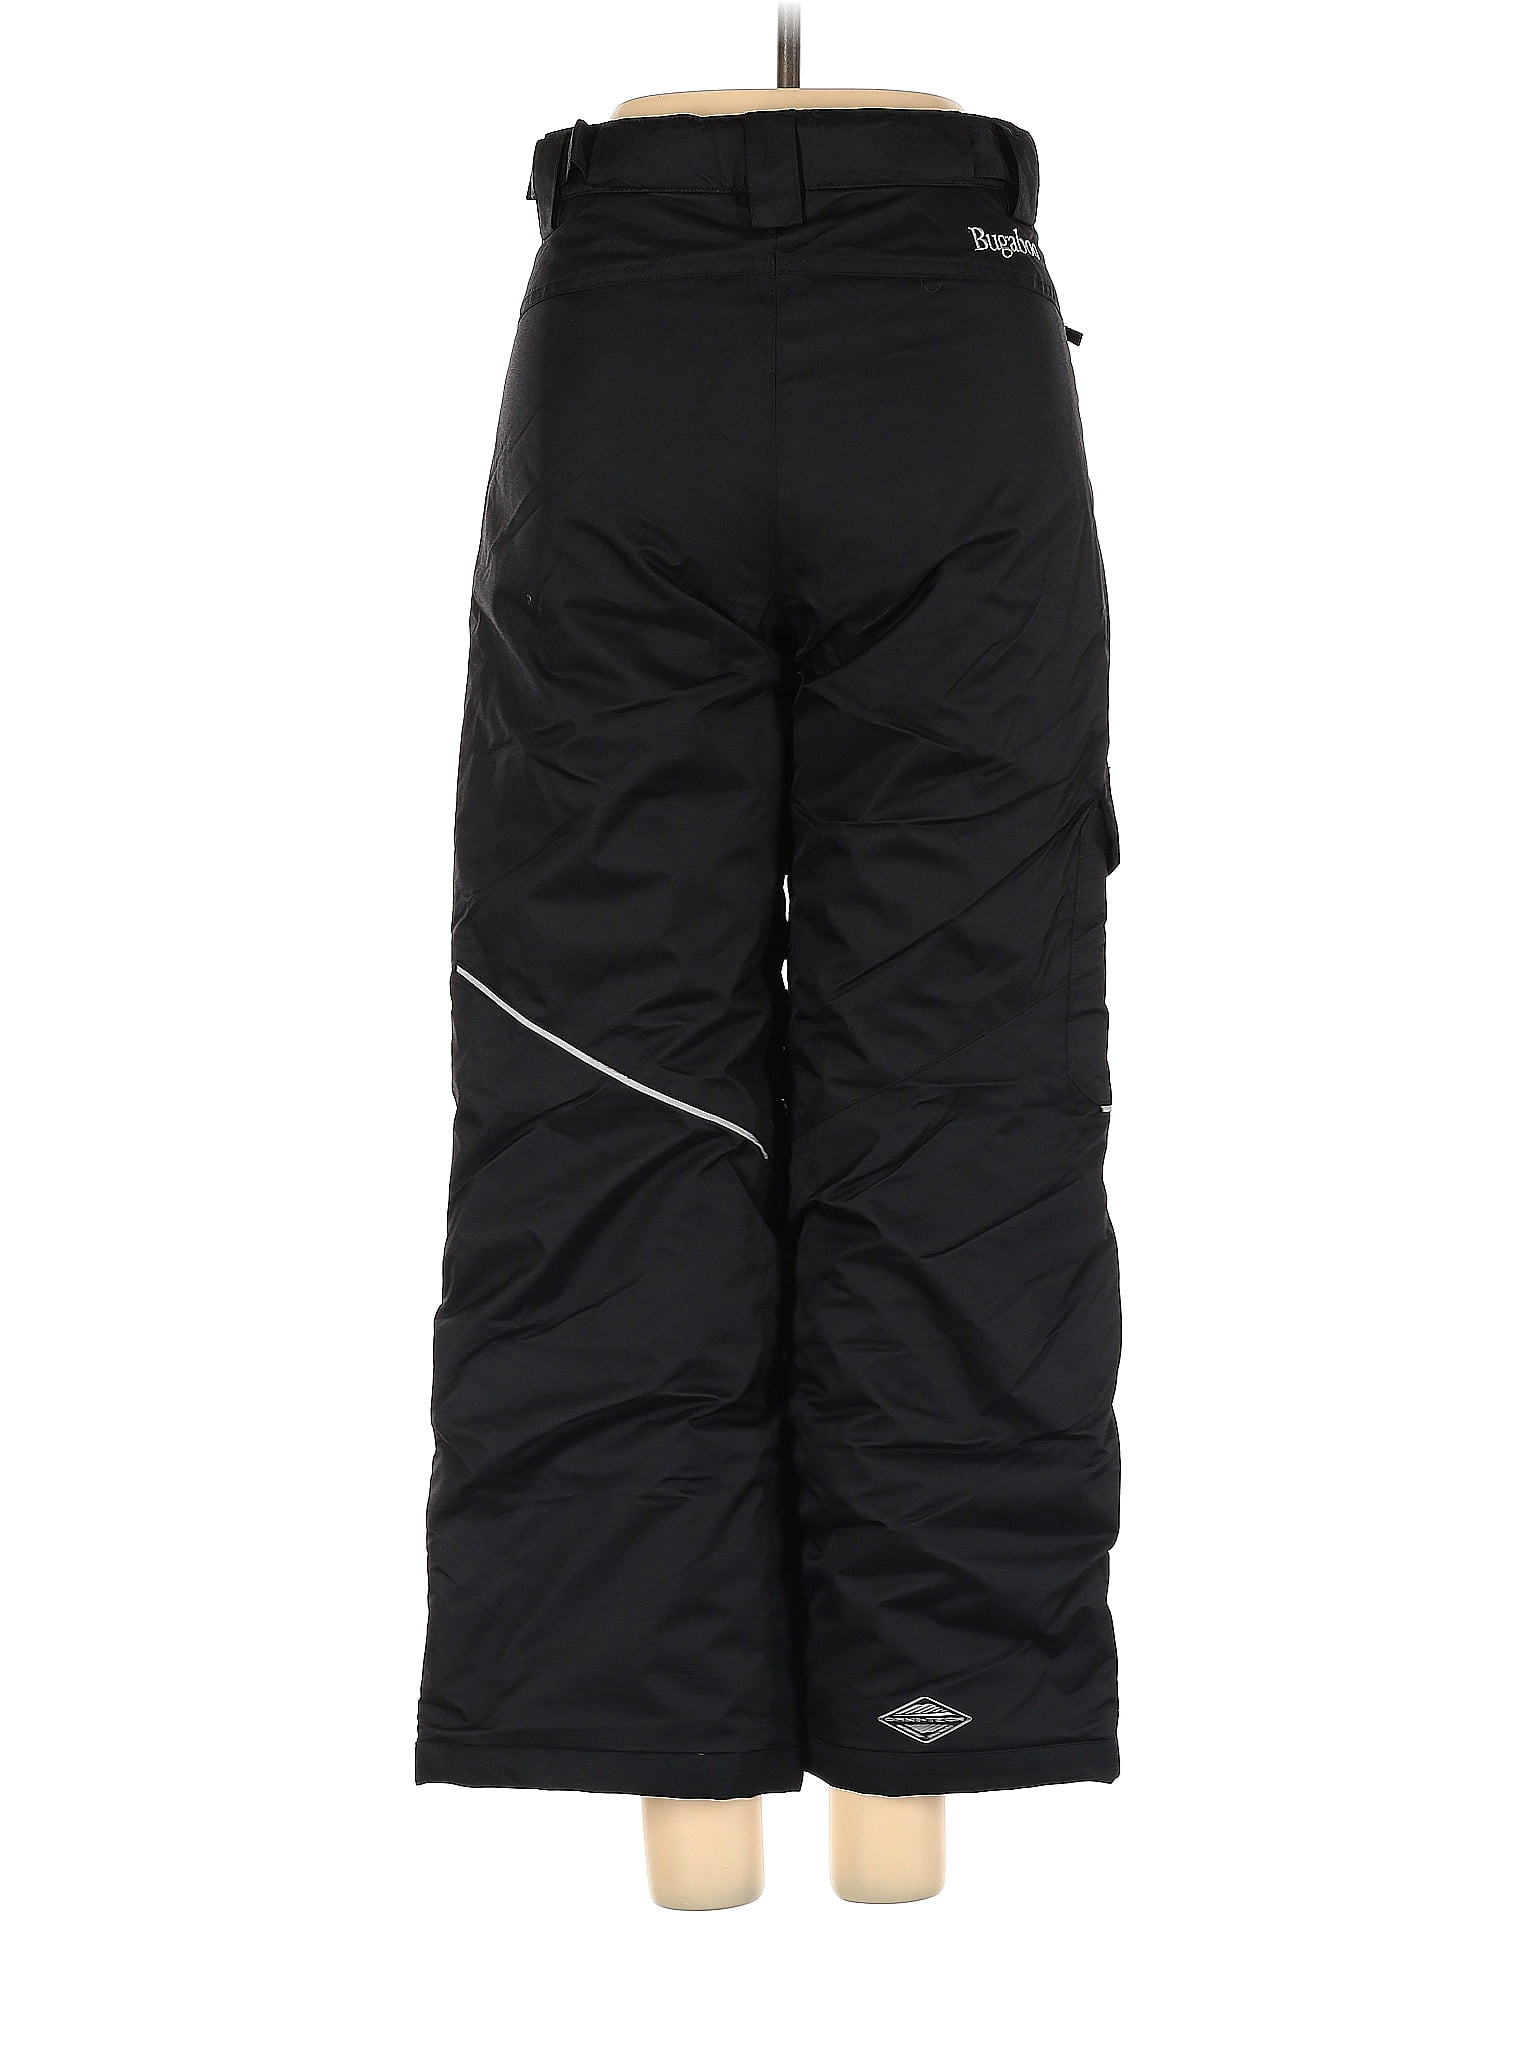 Columbia 100% Nylon Solid Black Snow Pants Size M - 75% off